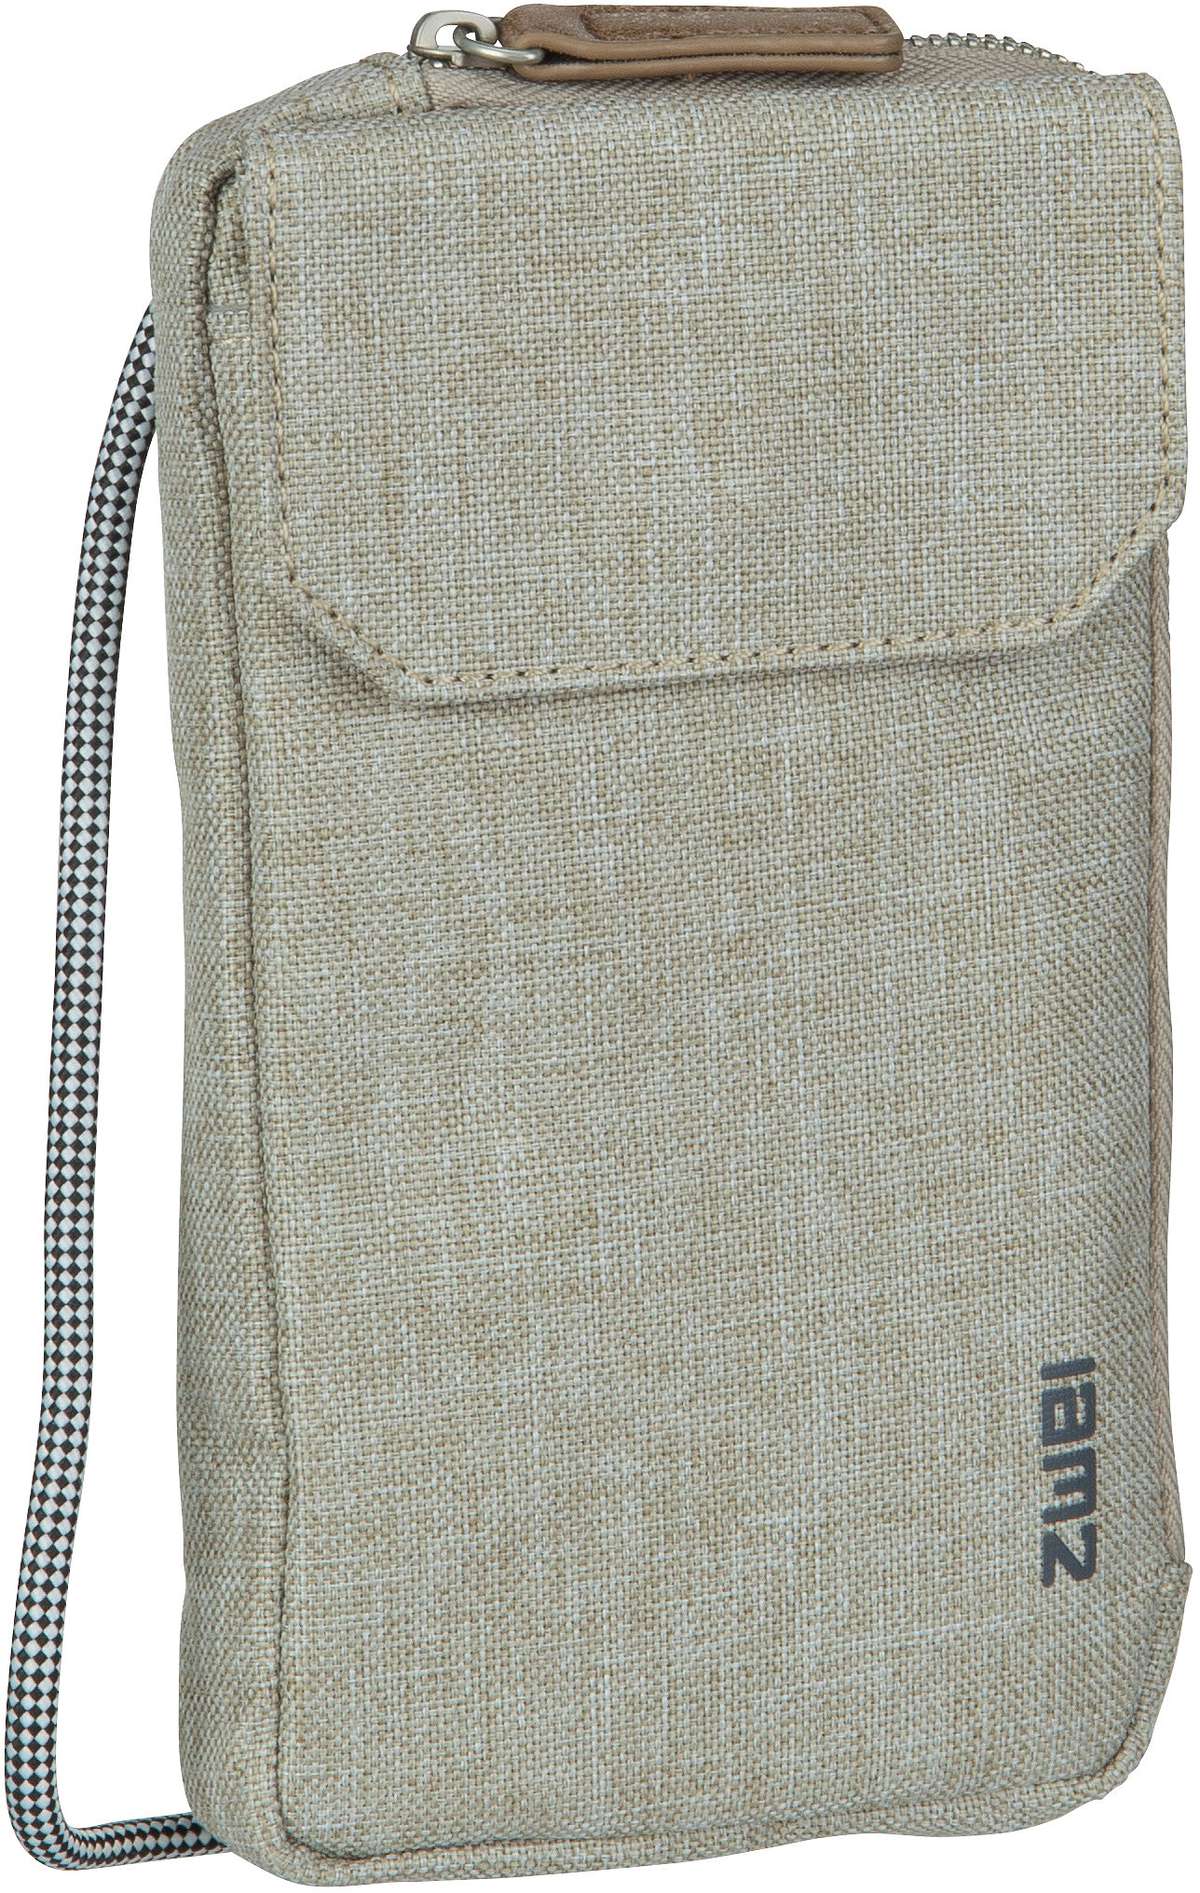 zwei Olli Phone Bag OP30  in Beige (0.6 Liter), Umhängetasche